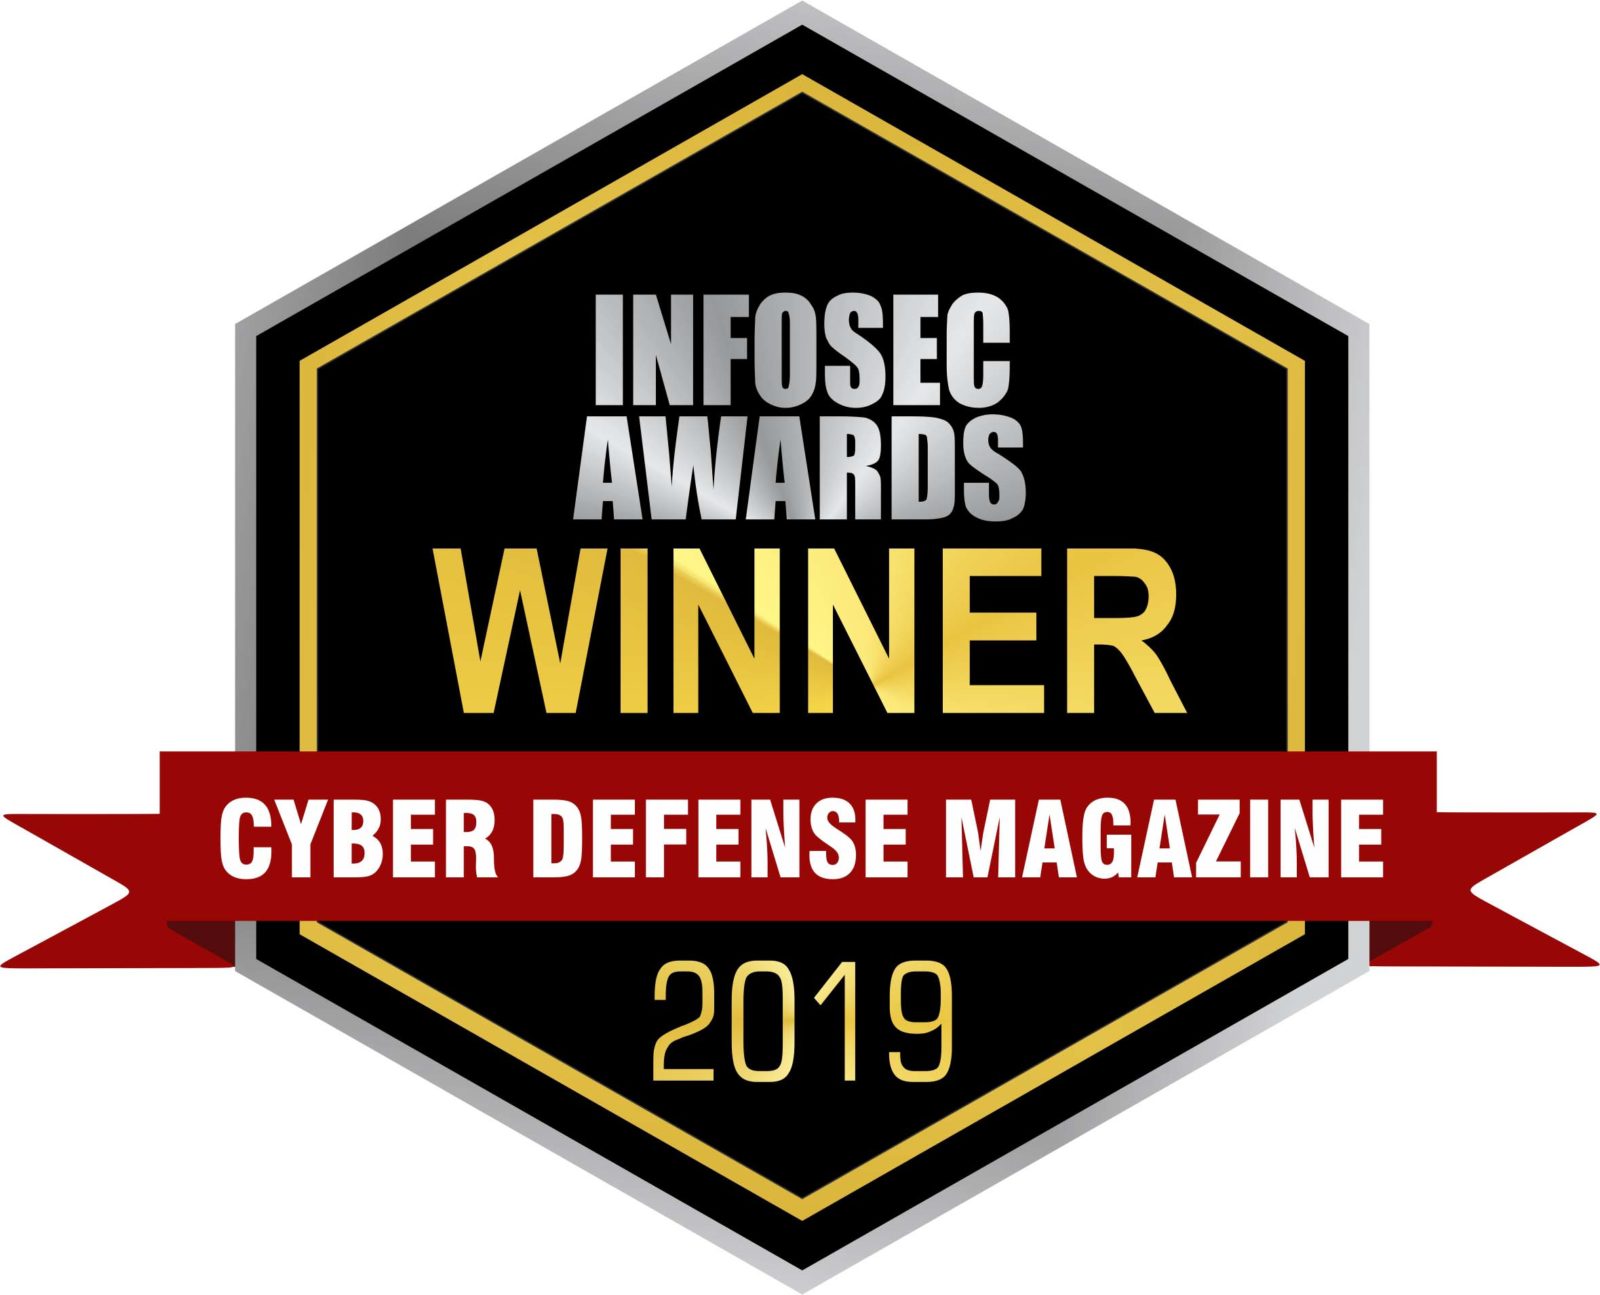 Infosec Awards Winner Cyber Defense Magazine 2019